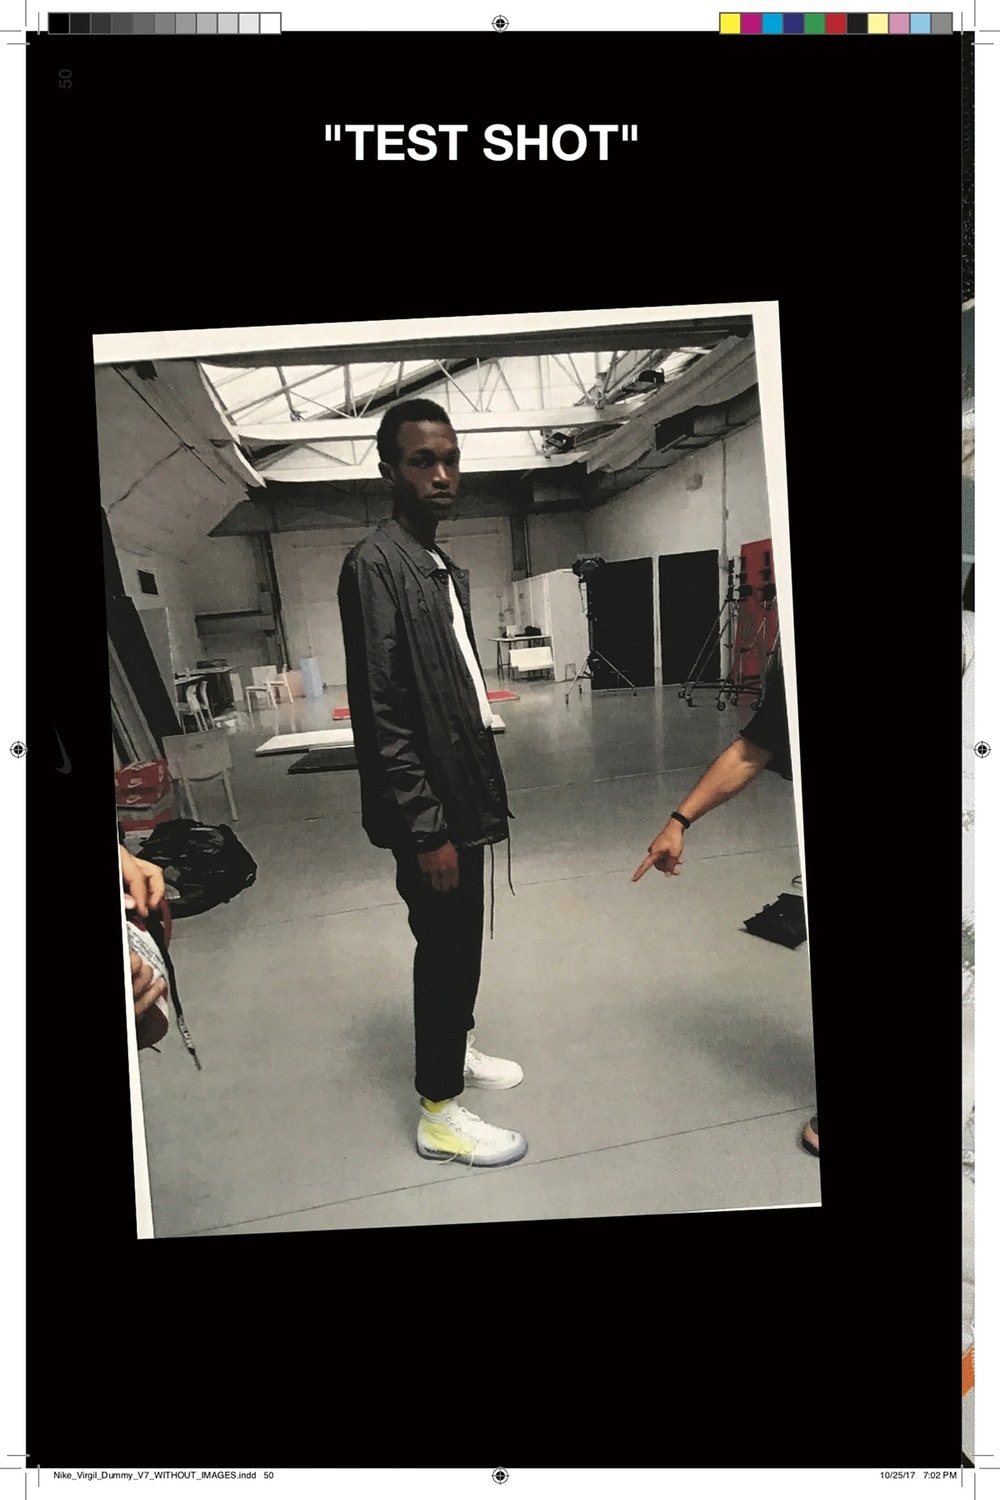 Virgil Abloh x Nike "TEXTBOOK" 現已開放下載閱覽